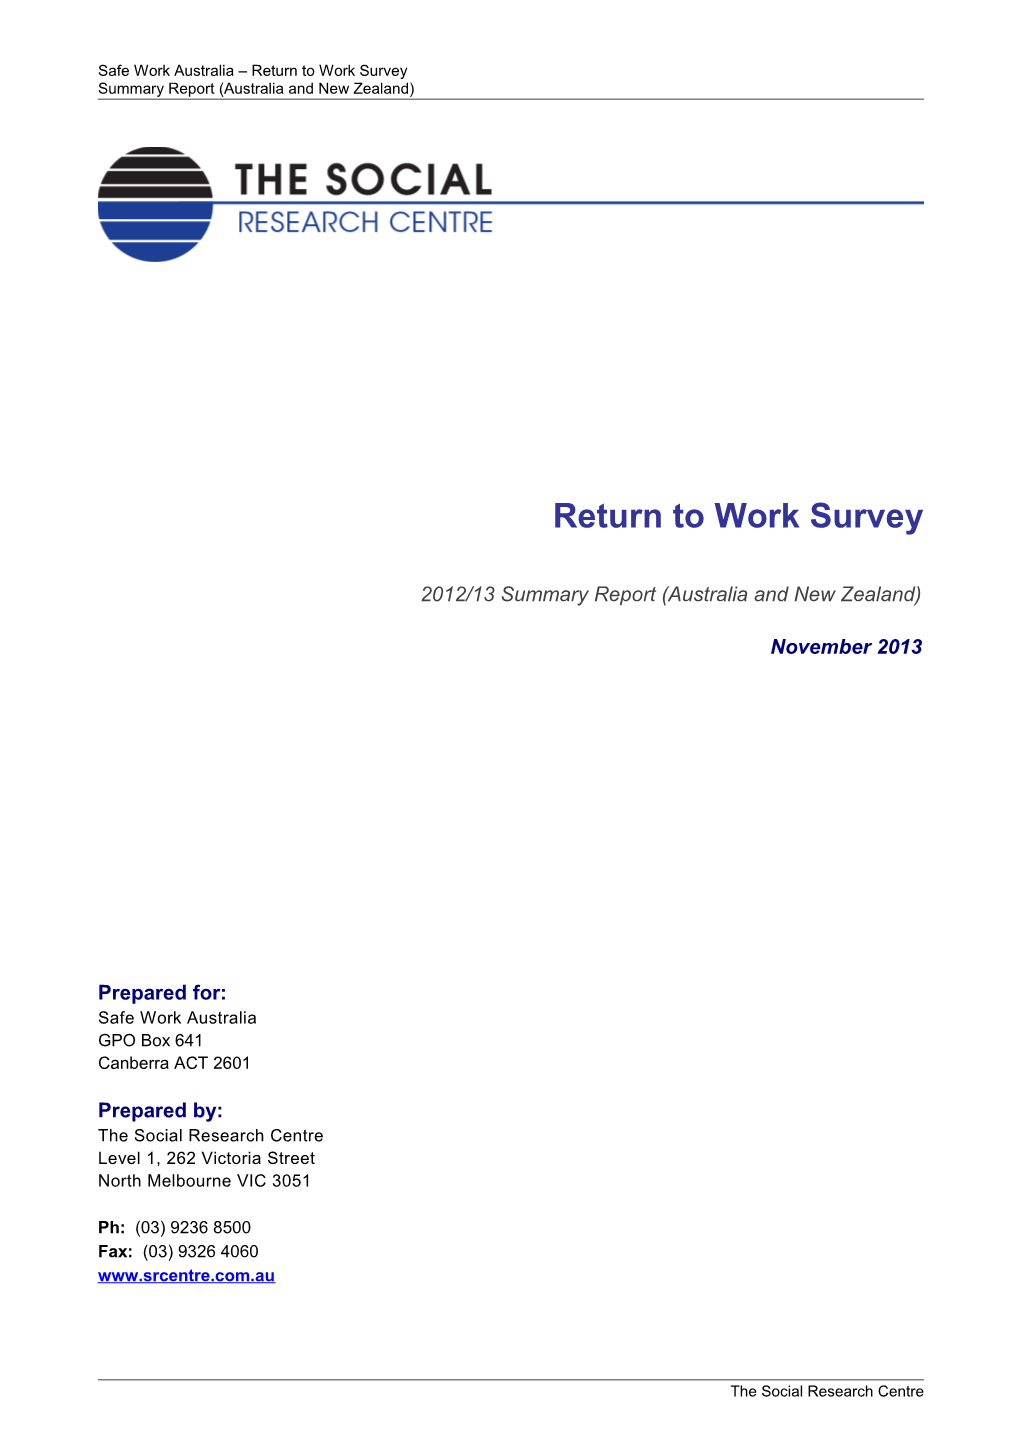 Return to Work Survey - 2012/13 Summary Report